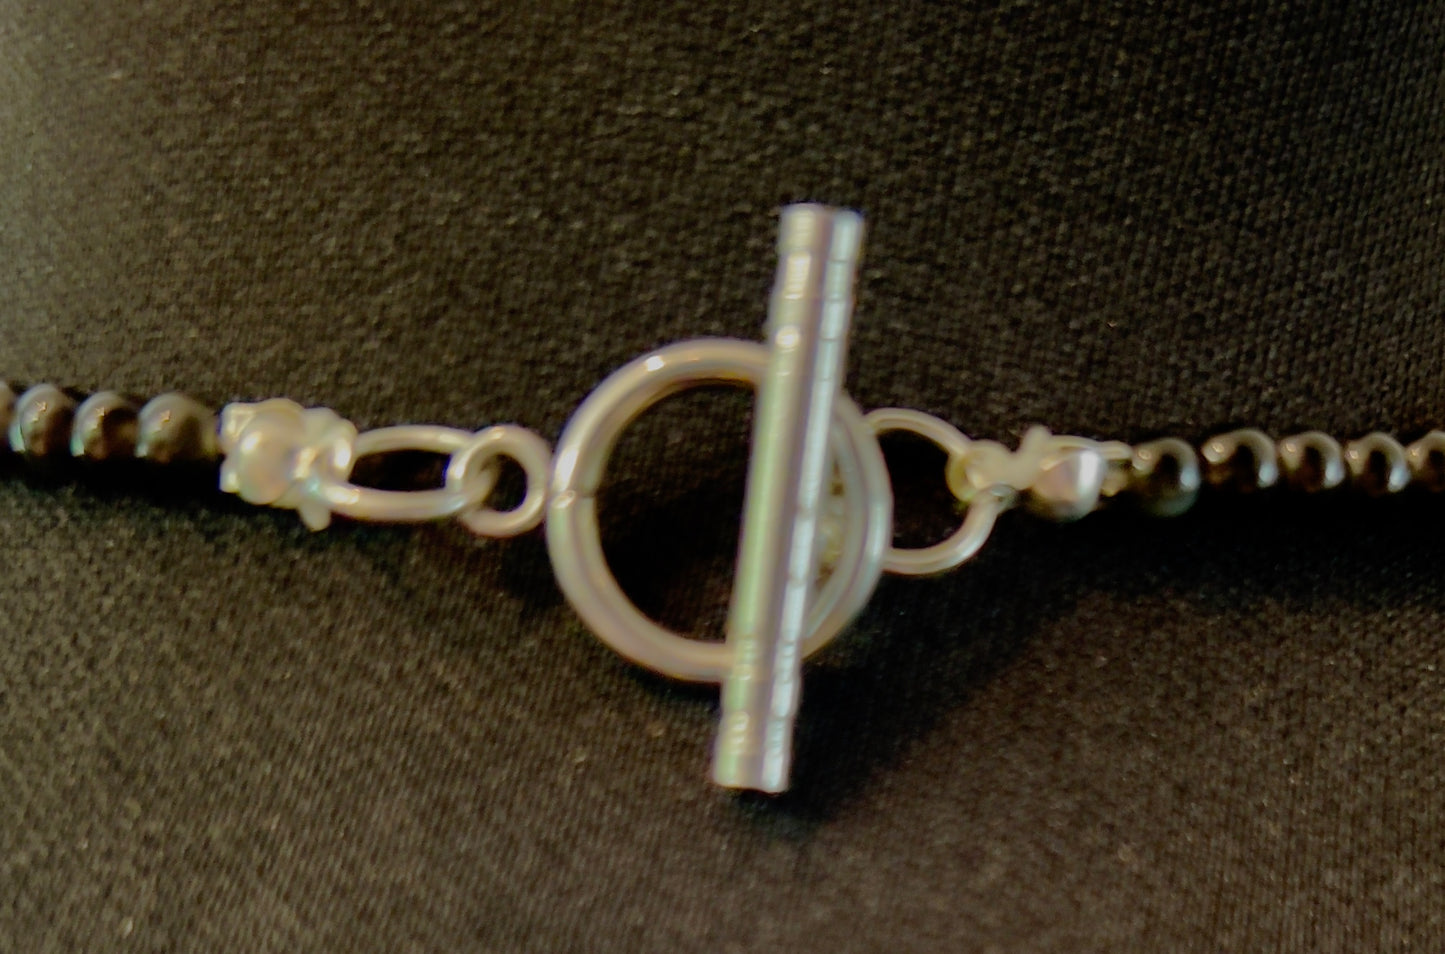 Irish Trinity Symbol Necklace of Matte Black Lava Volcanic Rock Beads